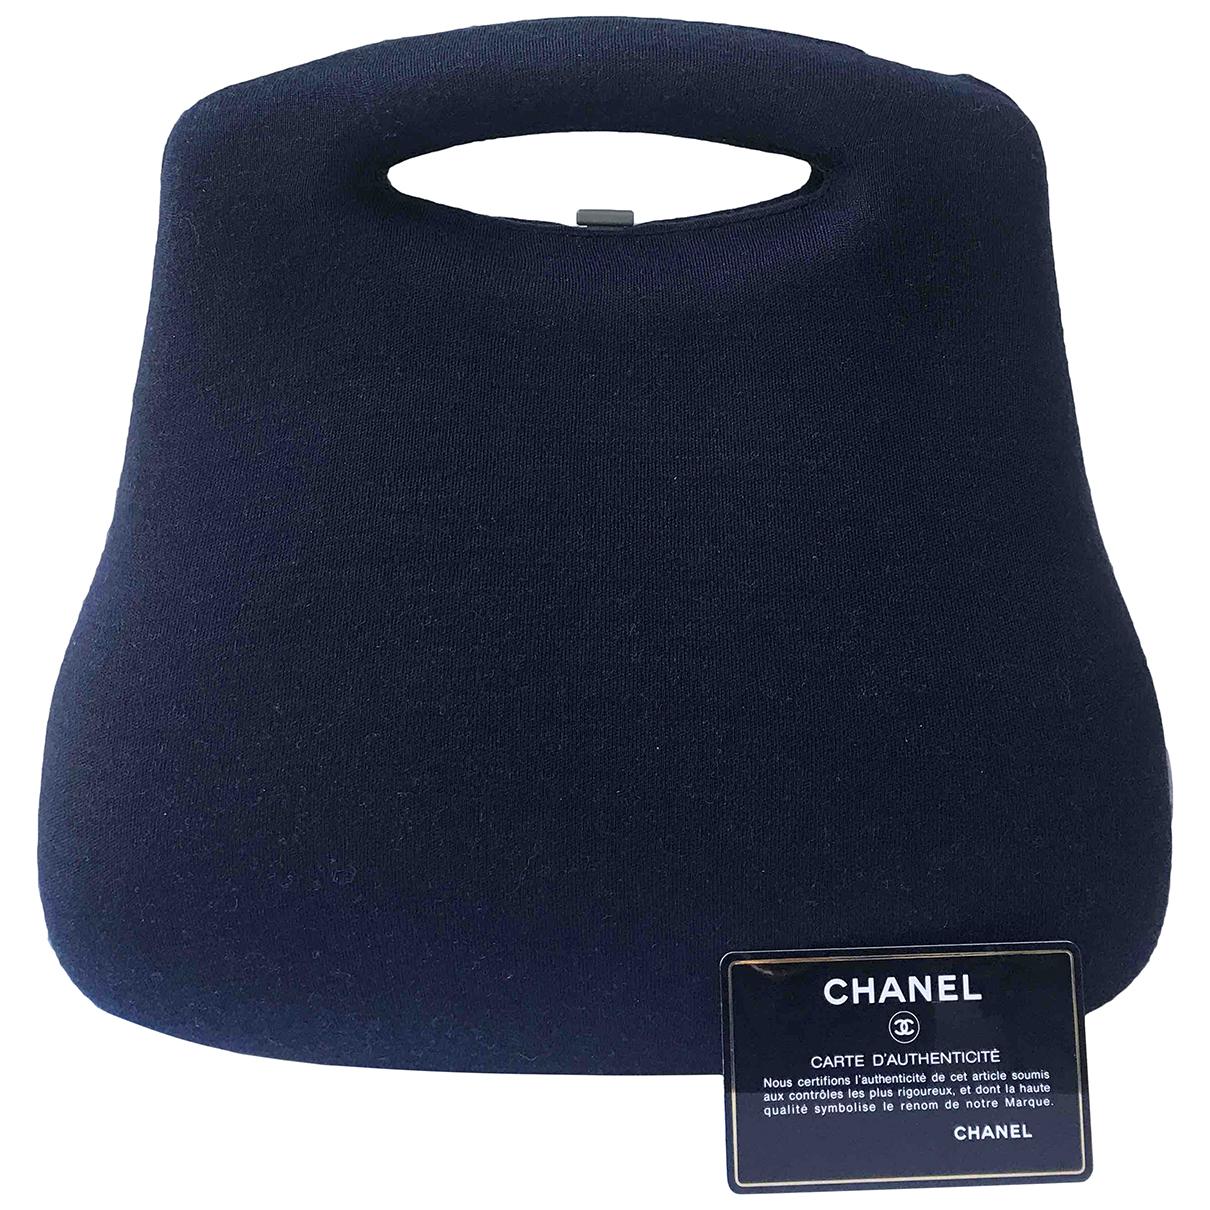 Chanel Millennium - For Sale on 1stDibs  chanel millenium bag, chanel  millennium 2005 bag, chanel millennium bag